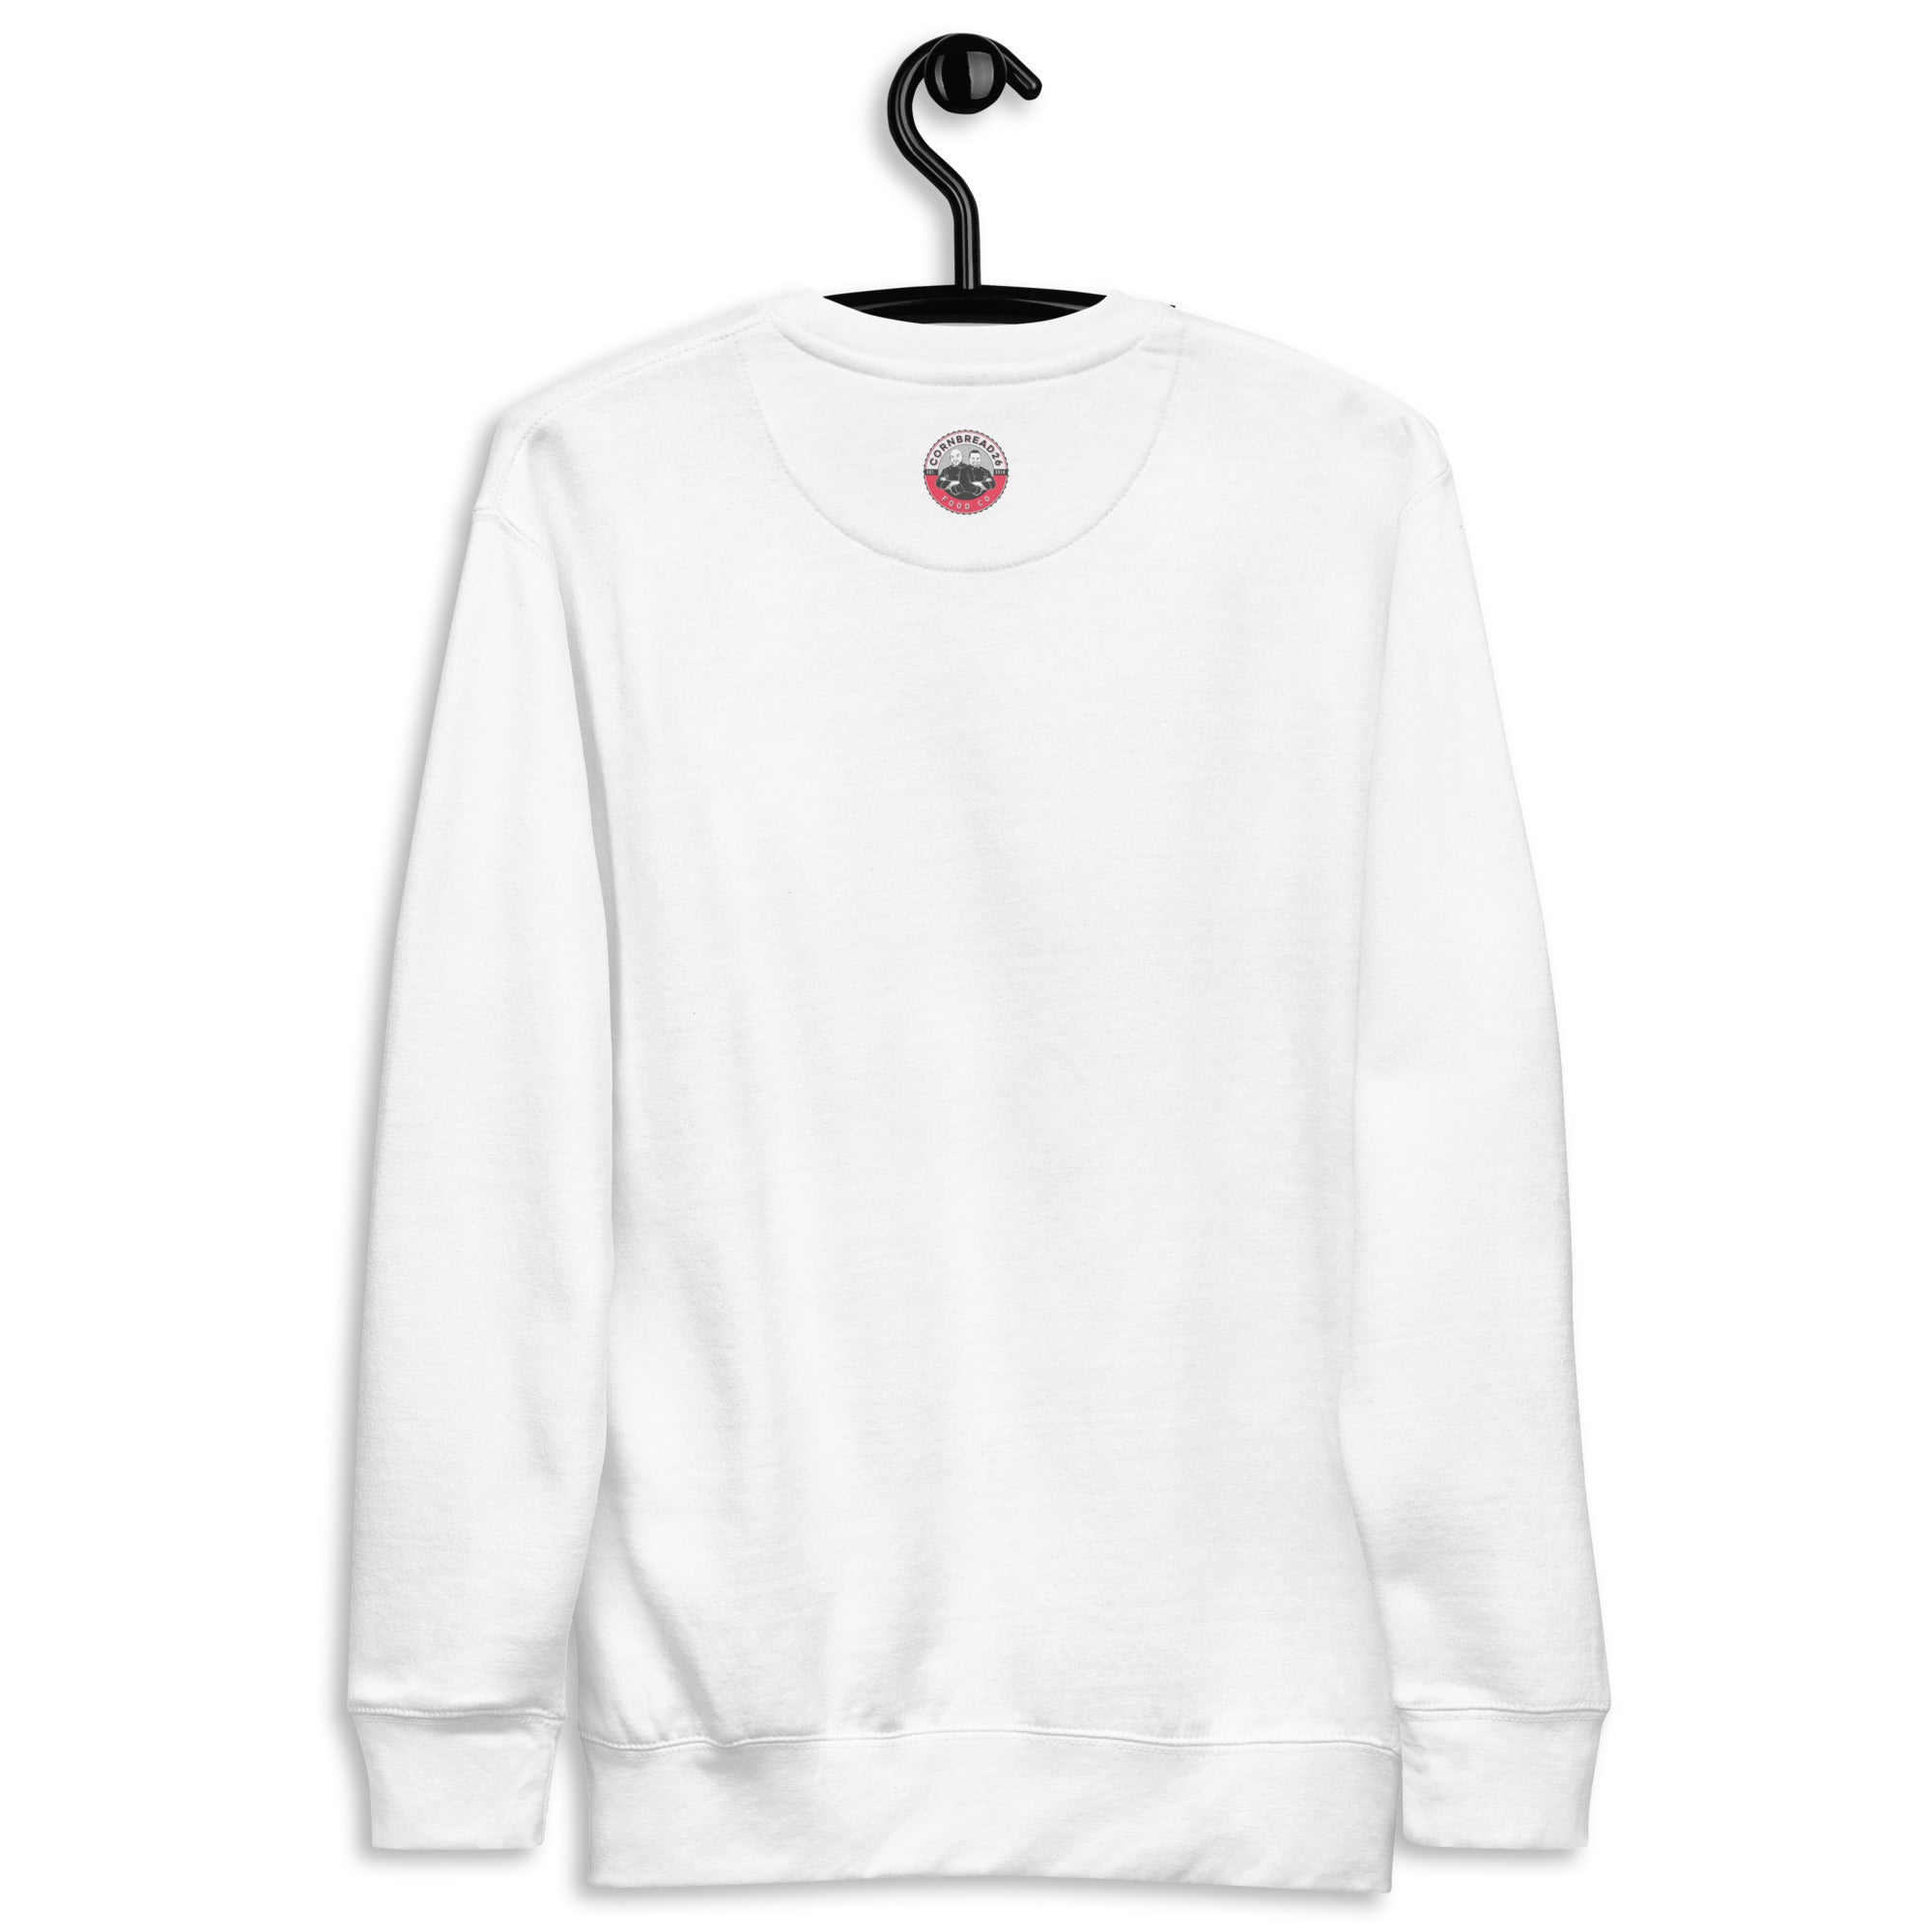 Unisex "Food = Life" Stitched Premium Sweatshirt - THE CORNBREAD KITCHEN SHOP